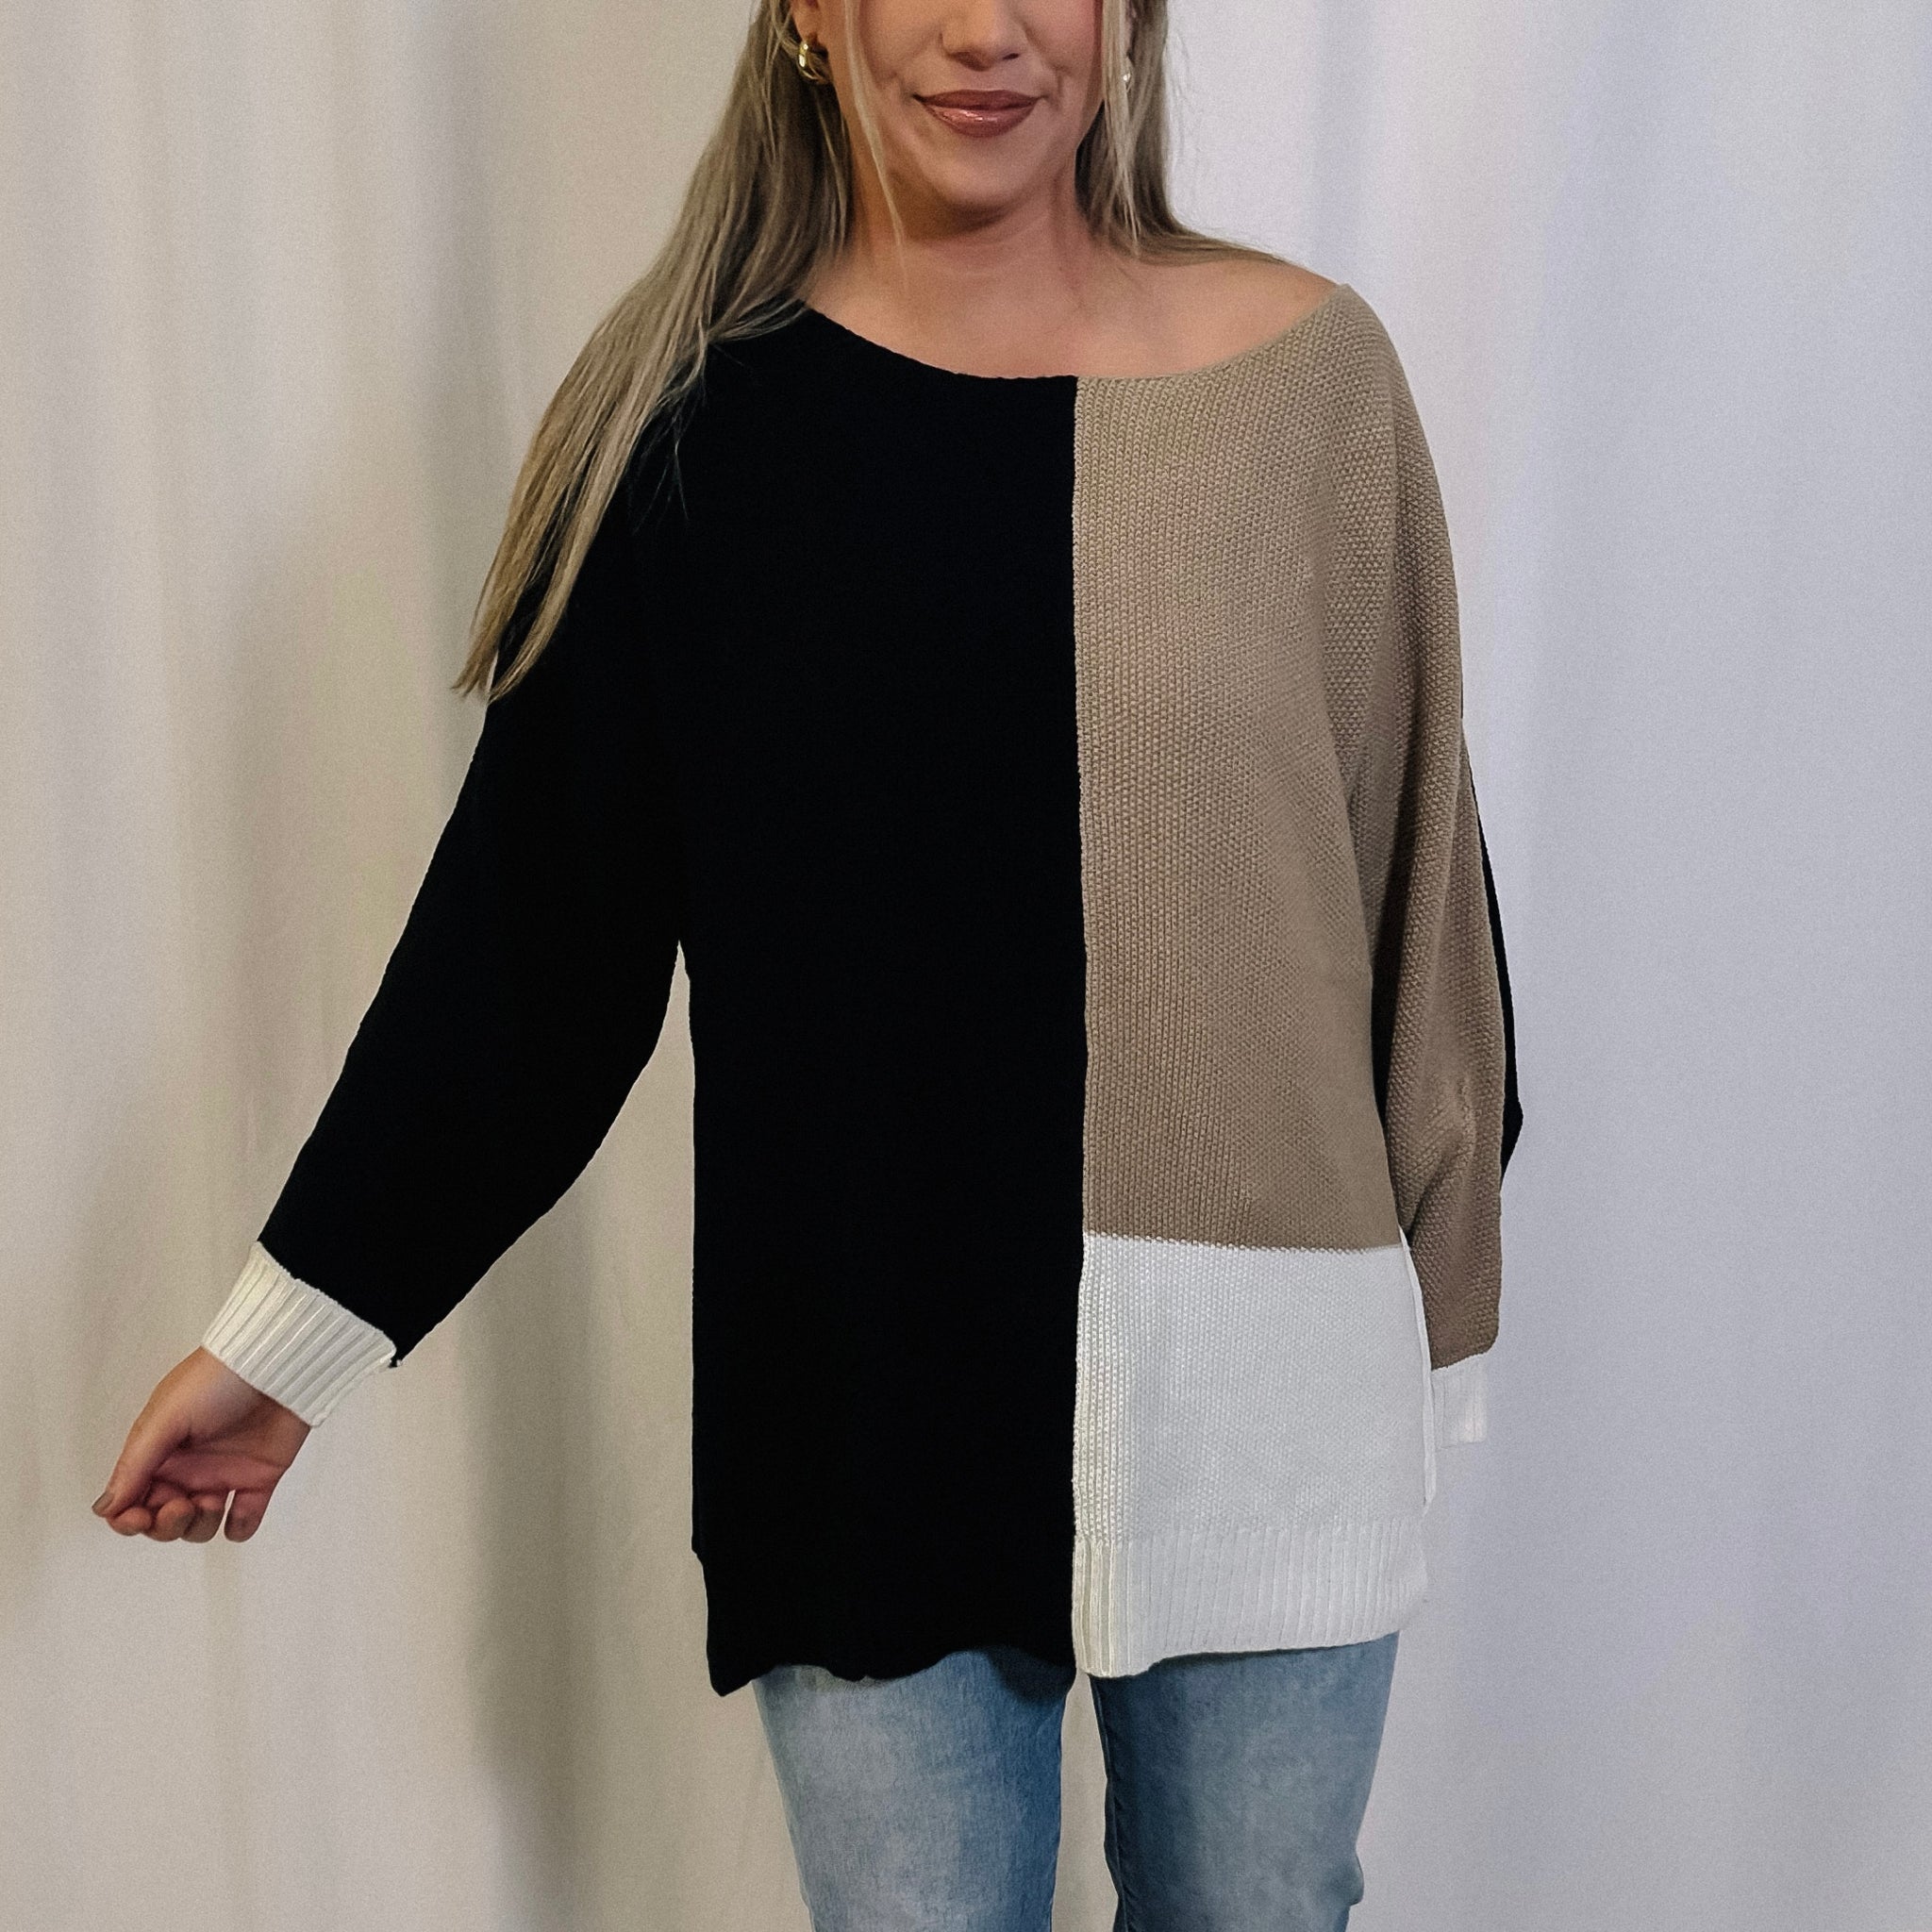 Black & Tan Colorblock Sweater